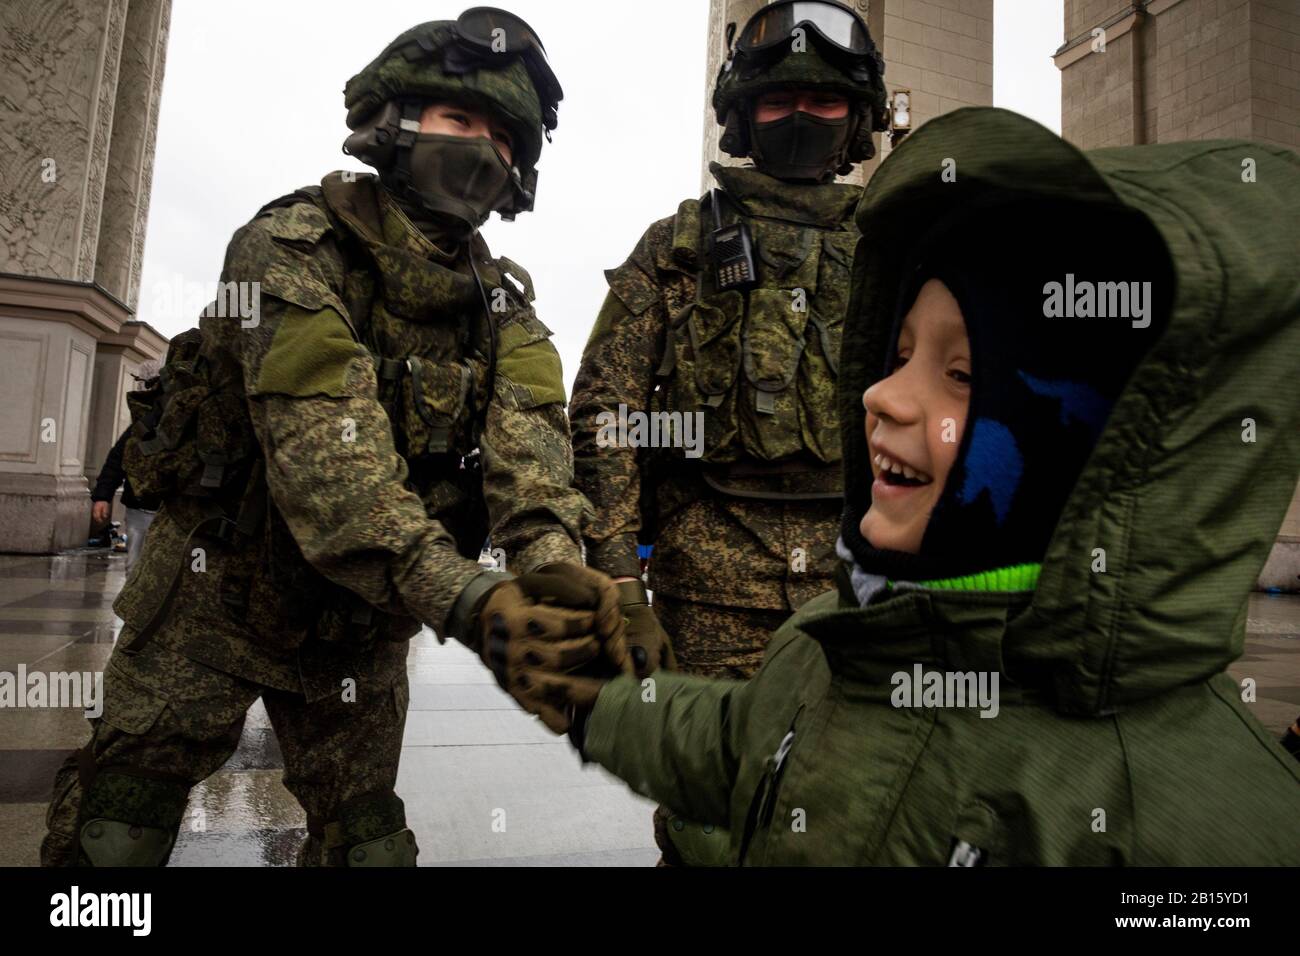 Uniforme ejército ruso e imágenes alta resolución - Alamy